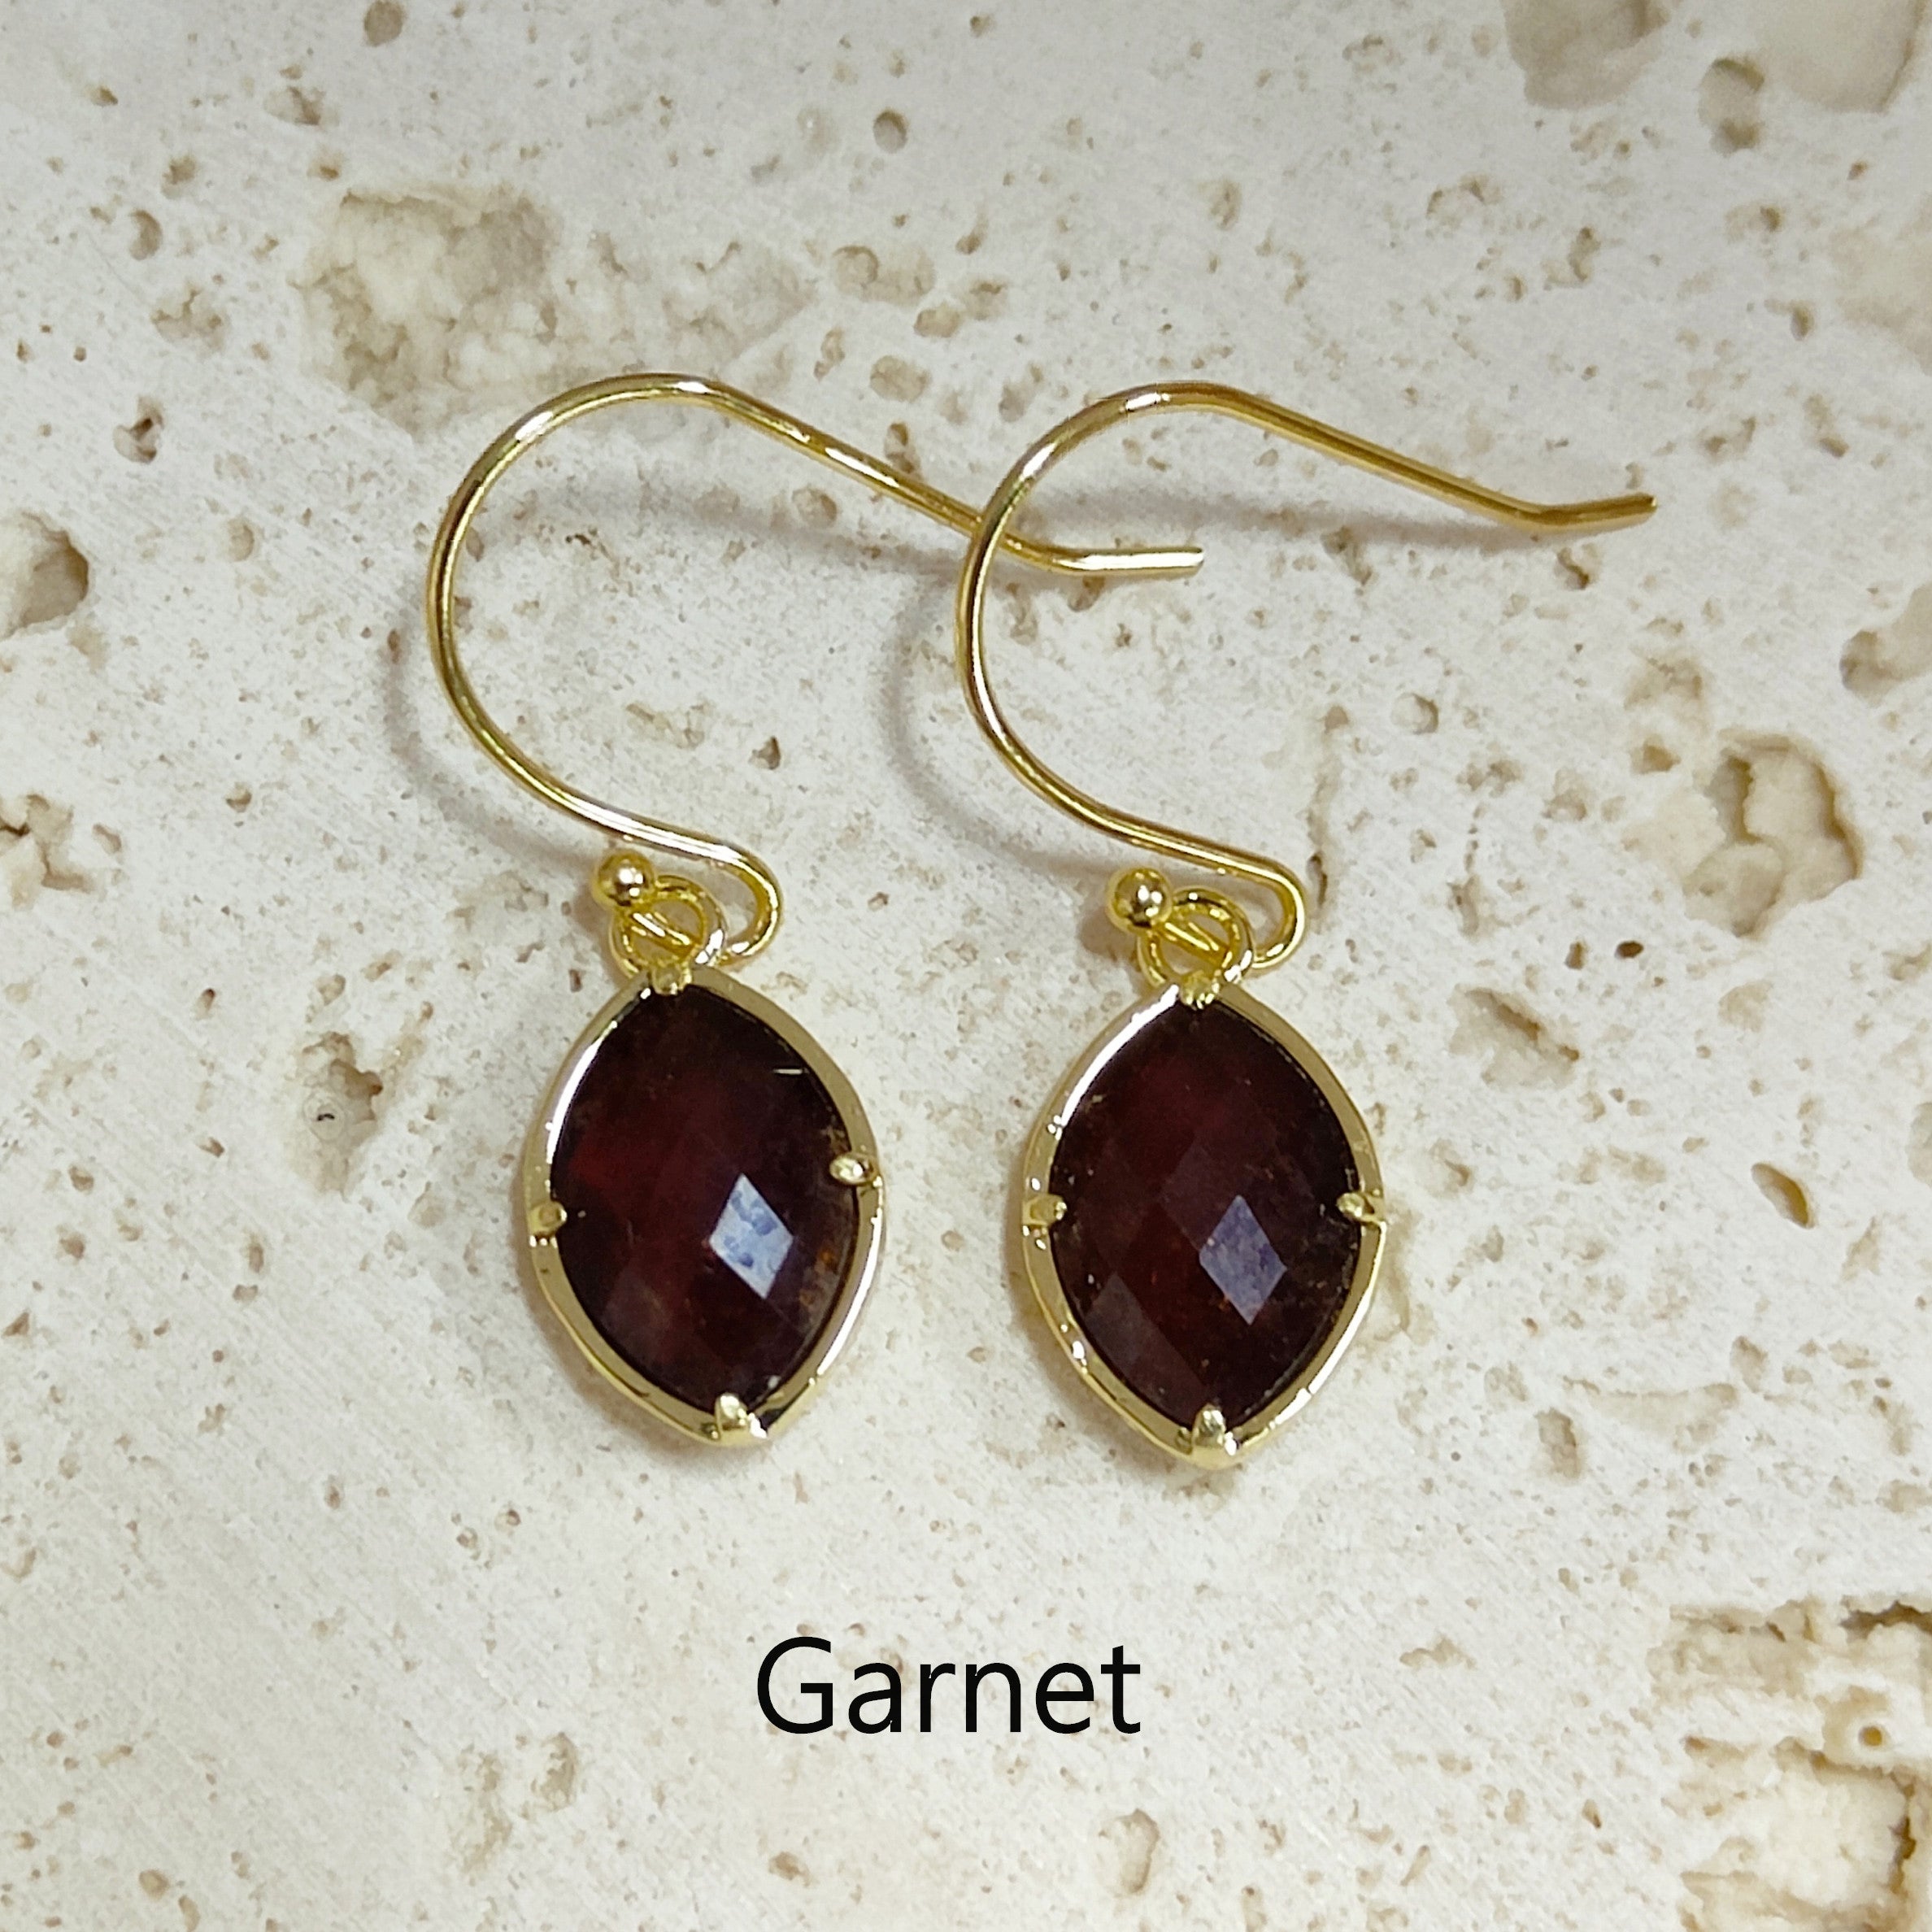 Wholesale Gold Plated Marquise Gemstone Earrings, Healing Crystals Stone Earrings Jewelry AL573 garnet earrings